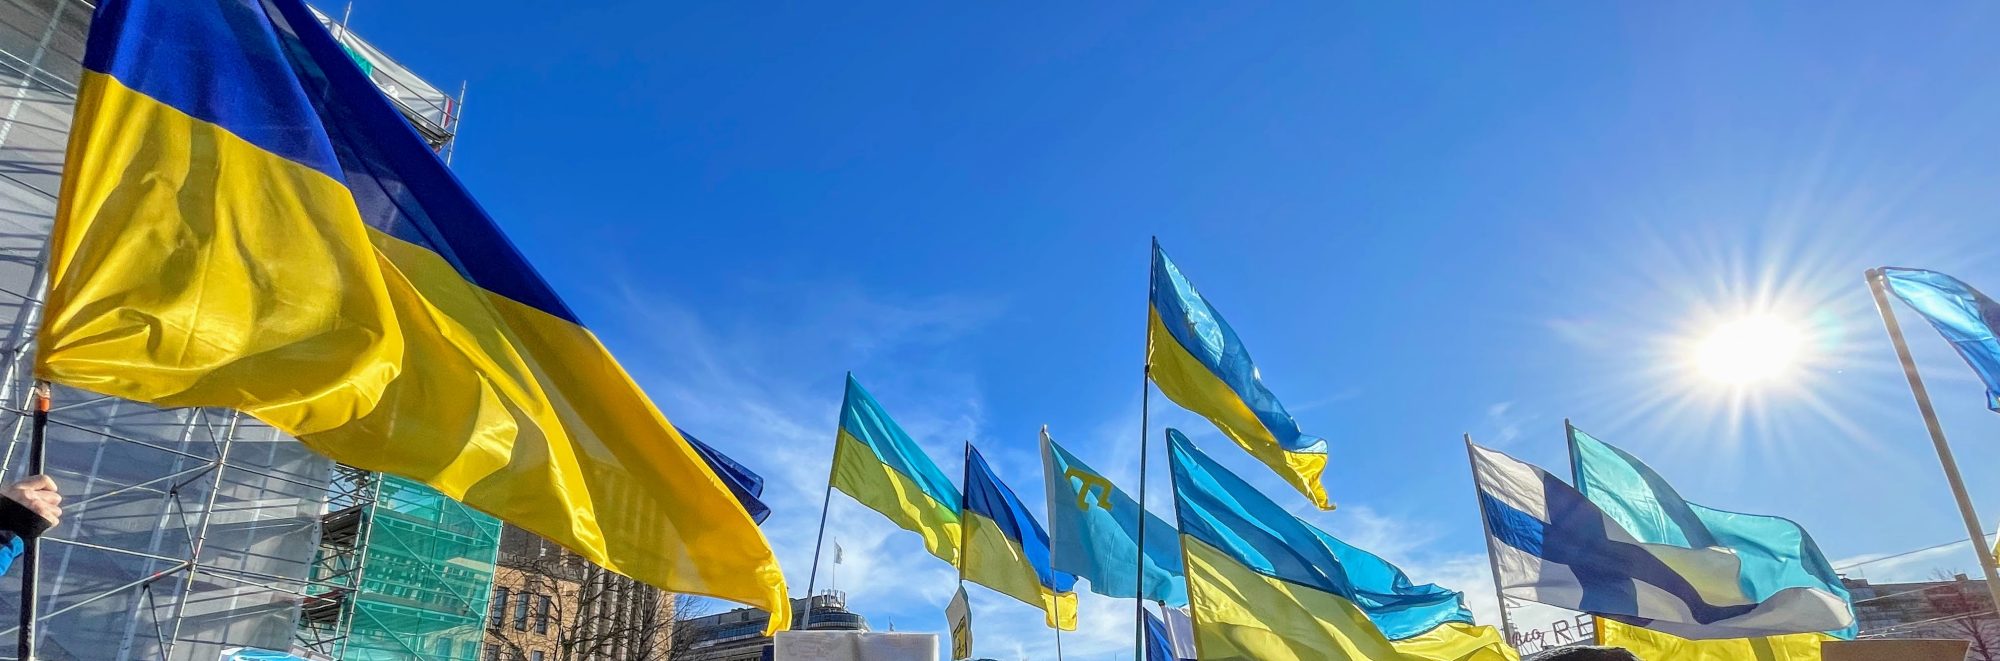 stand with ukraine banner